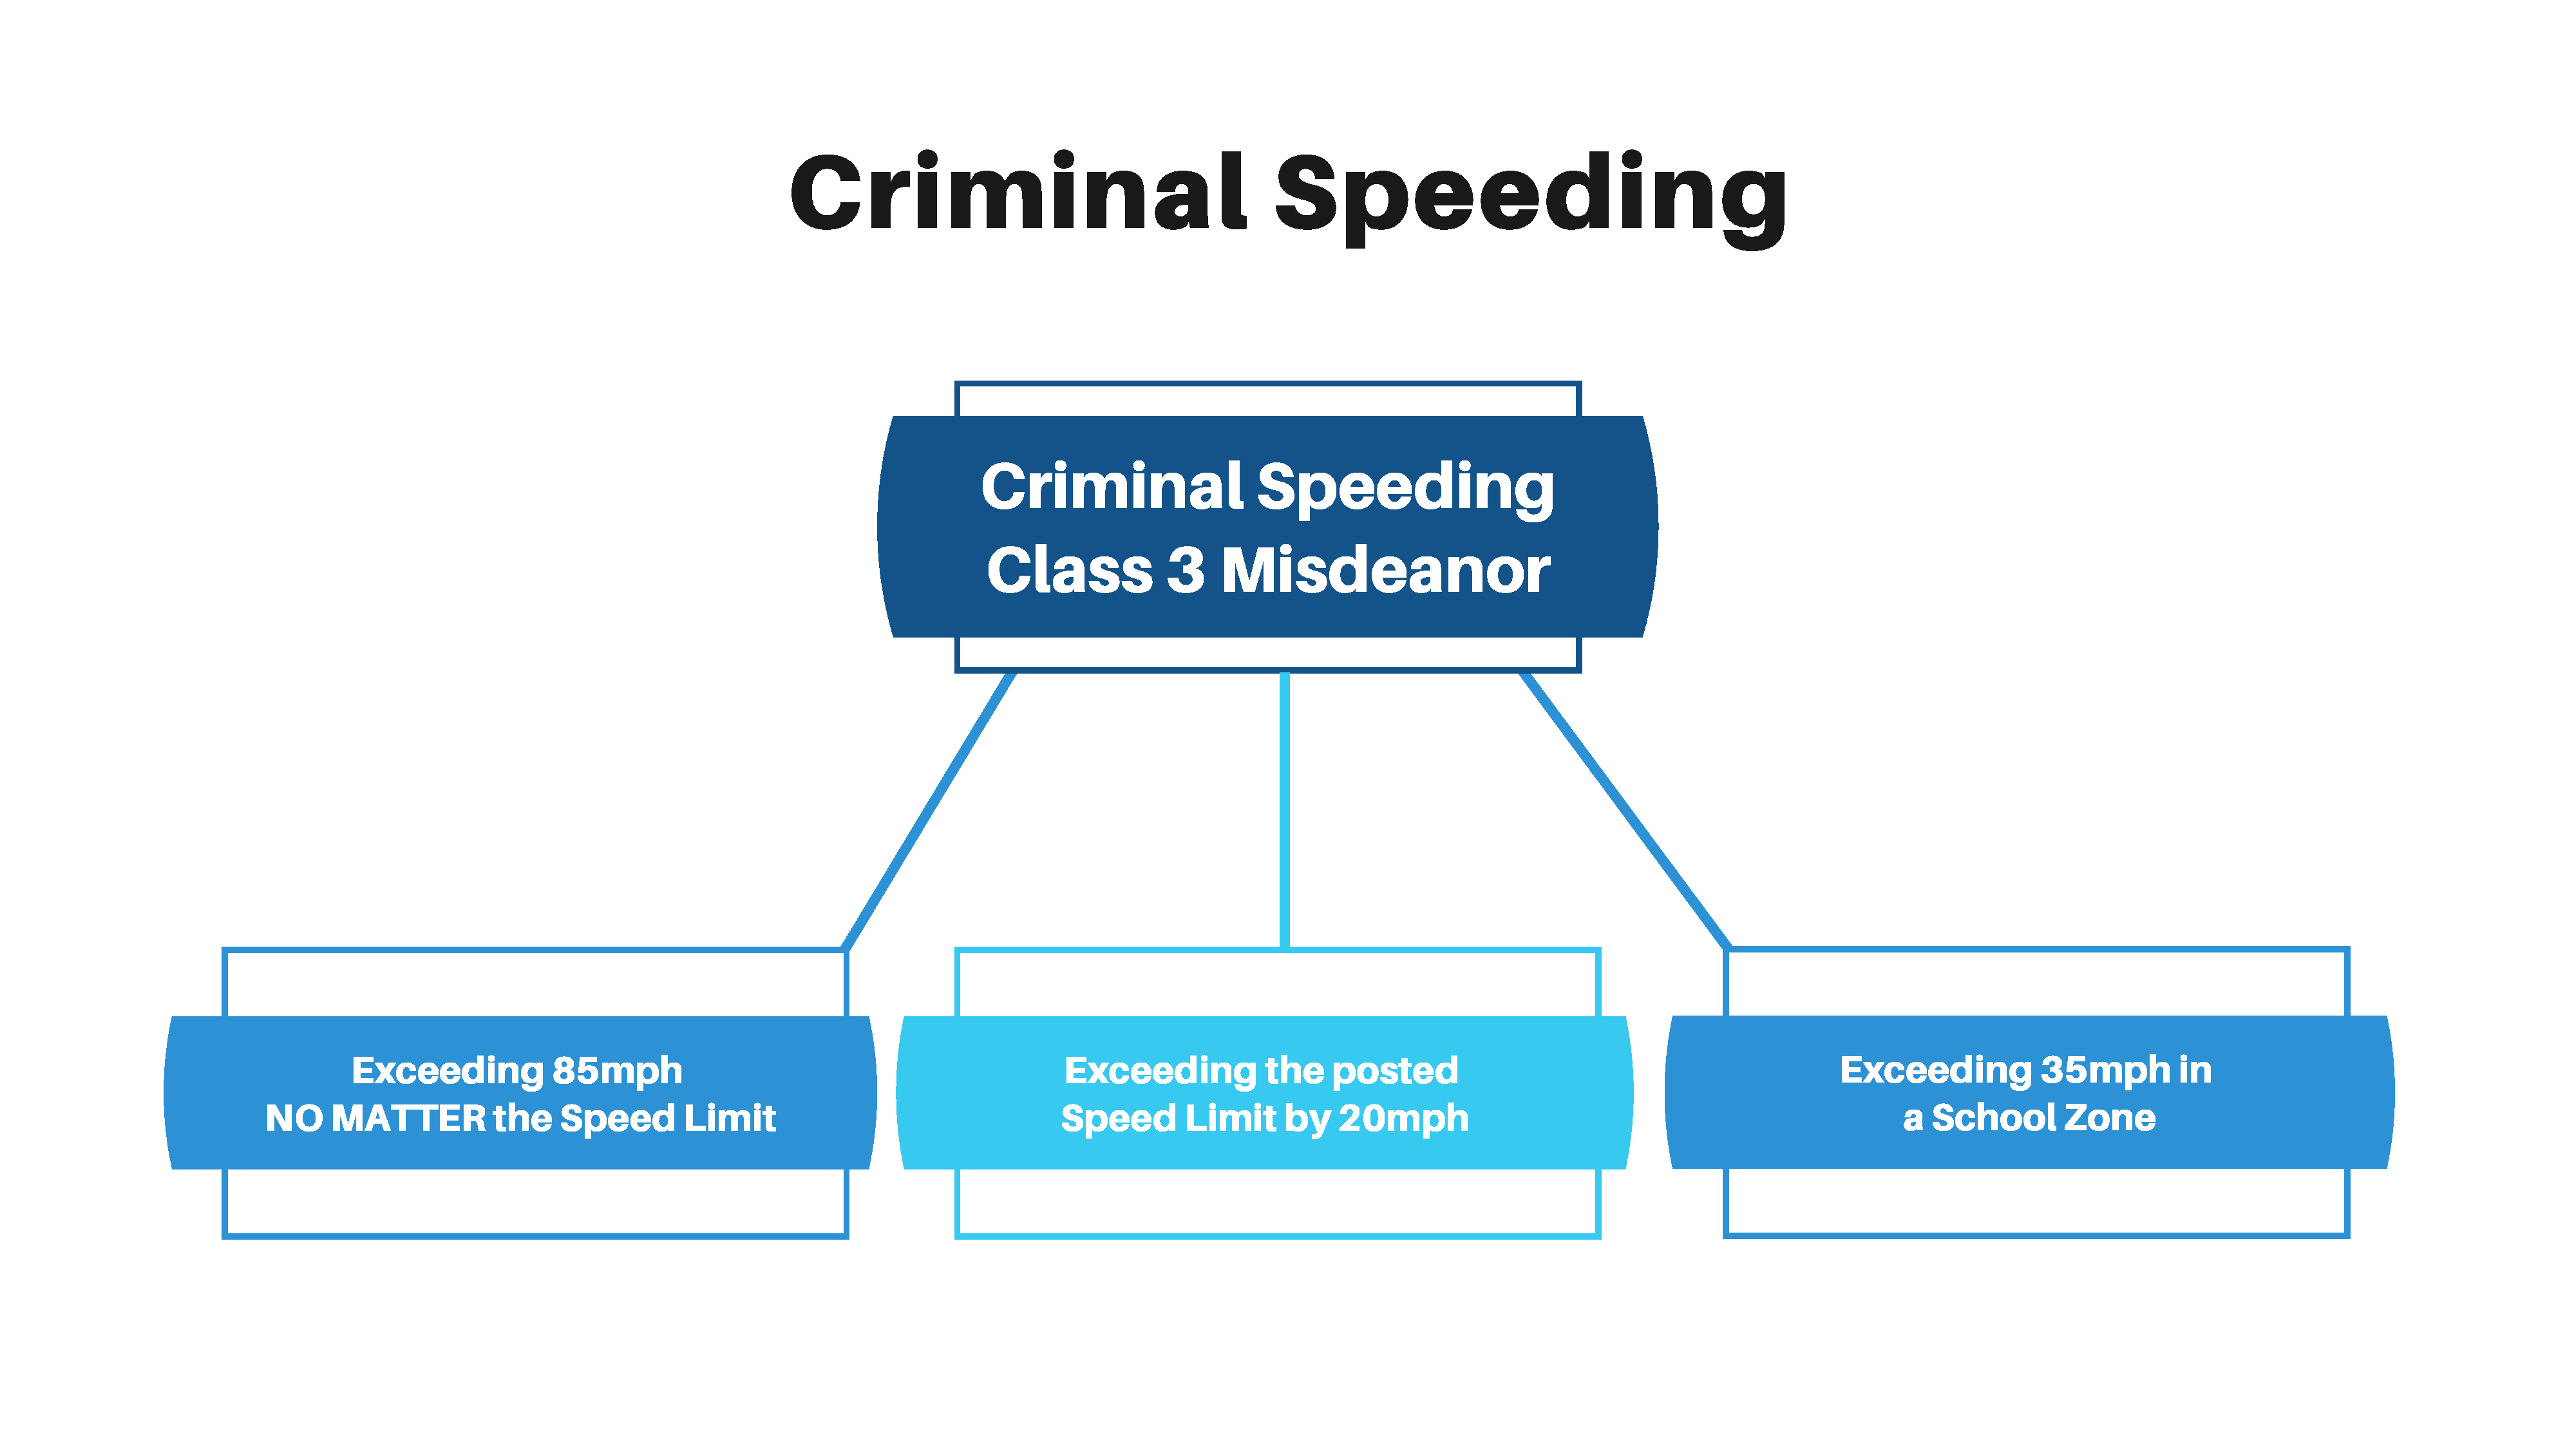 What is Criminal Speeding